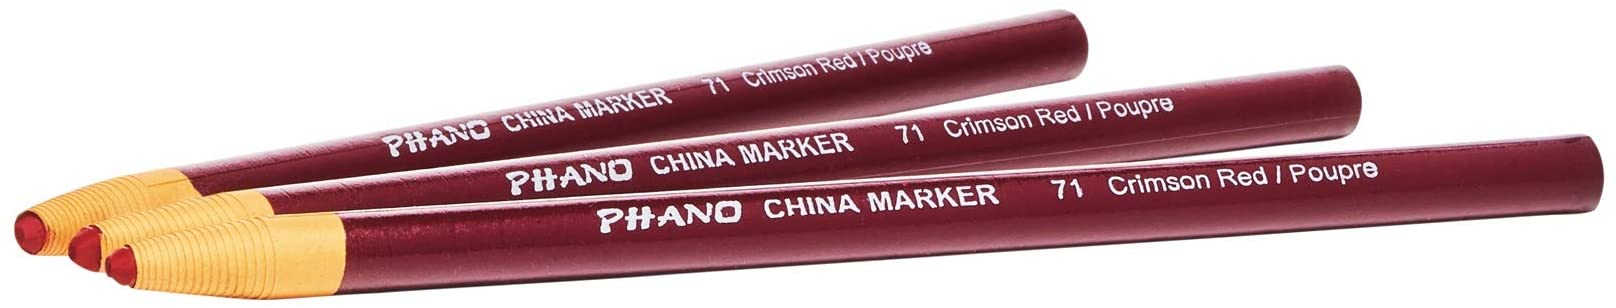 Dixon Industrial Phano Peel-Off China Marker Pencils, Crimson Red, 12-Pack (00071)